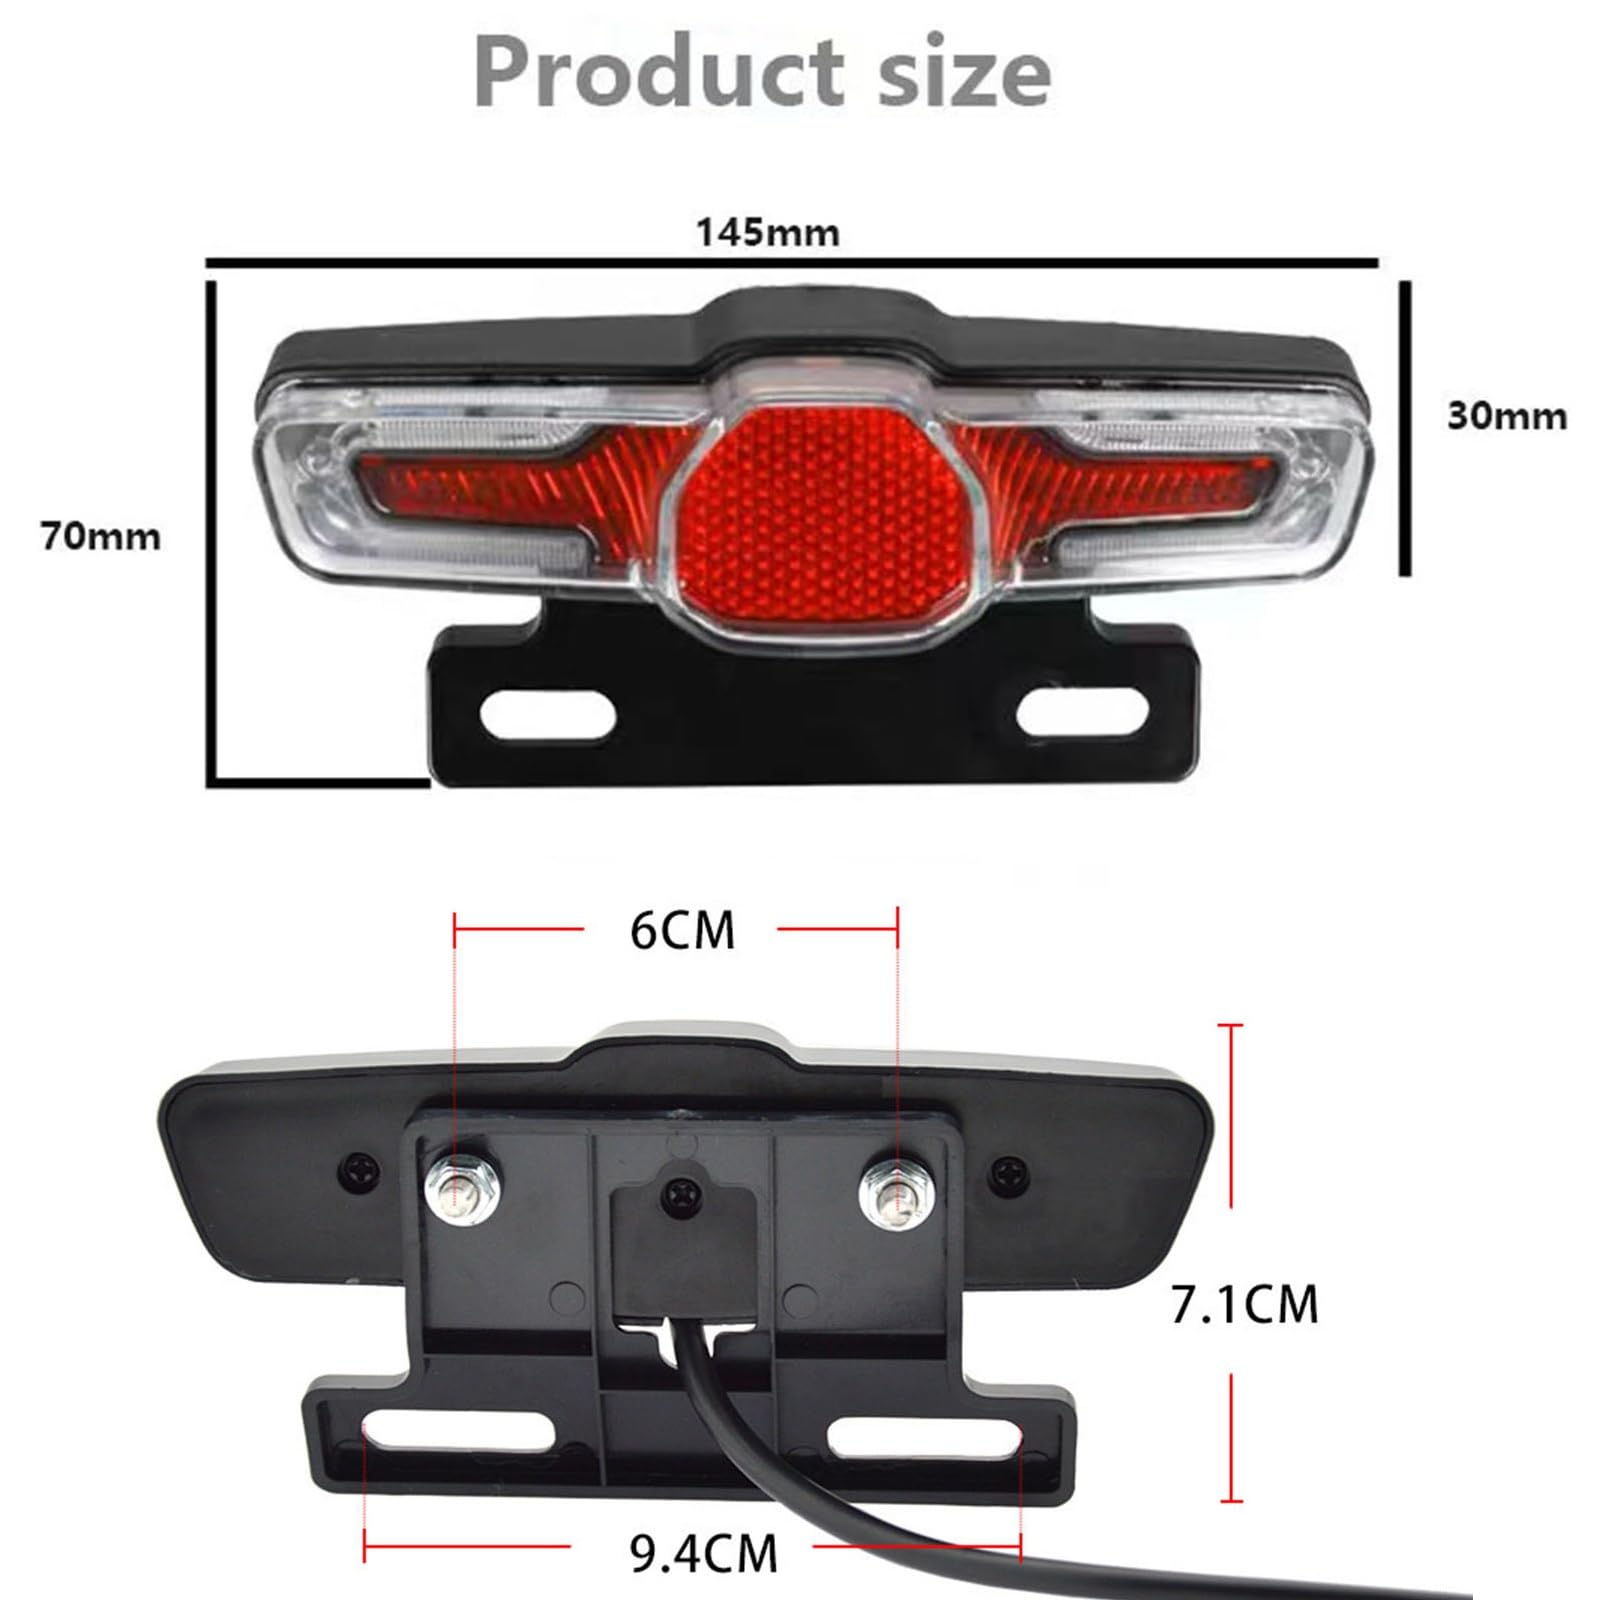 TT-EBIKE LED Taillight and Headlight 12-80V Super Taillight Electric Bike Headlight